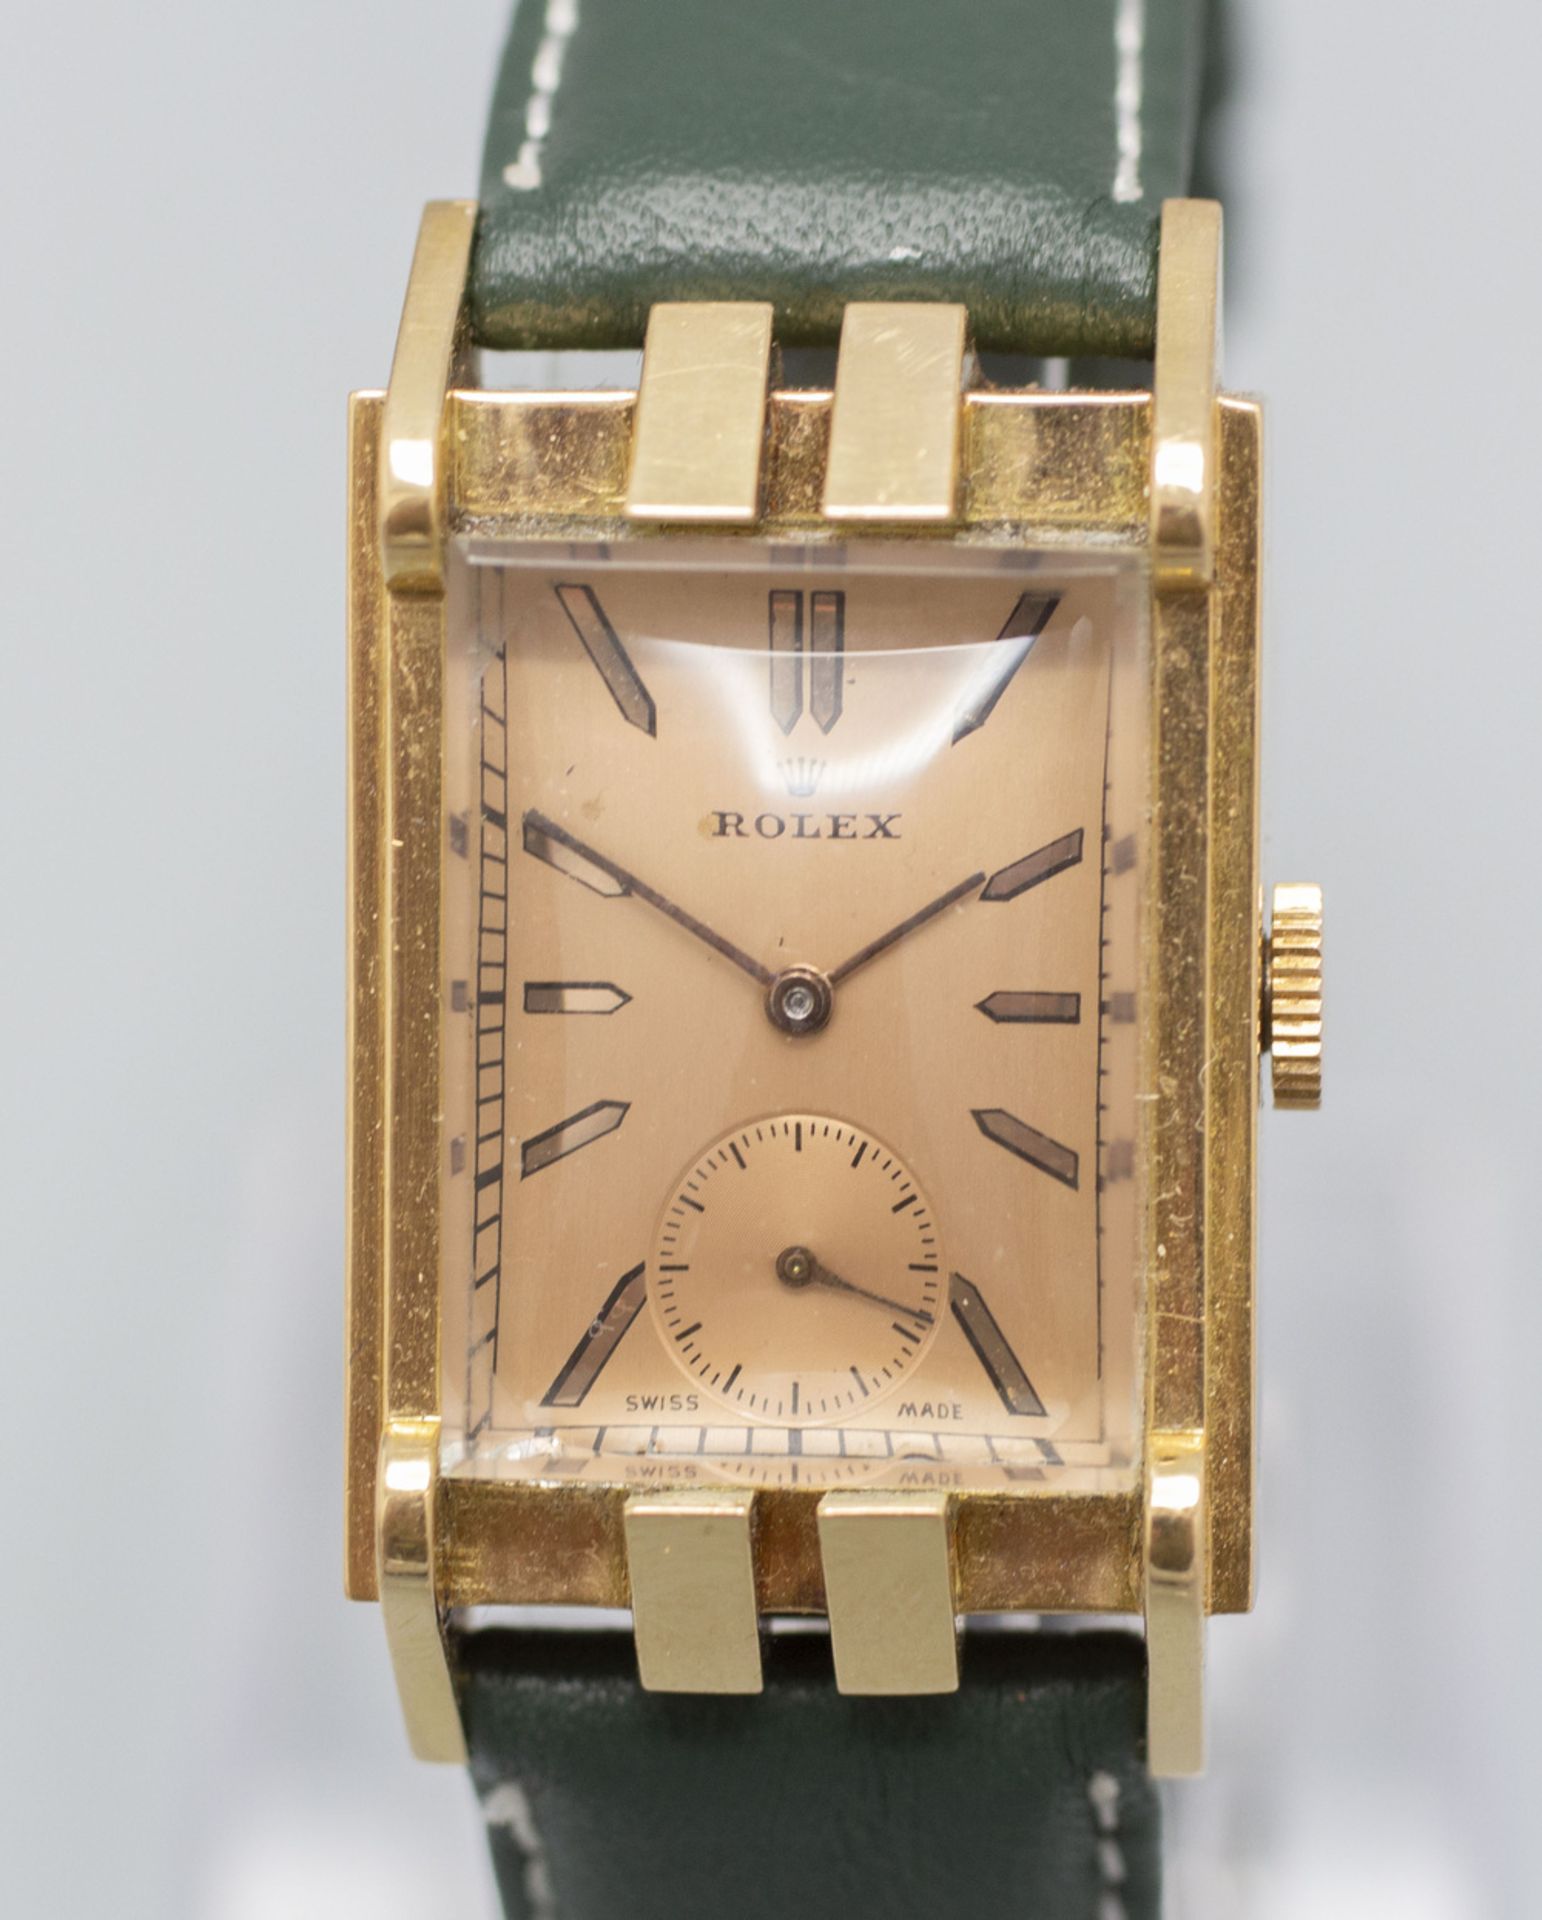 Herrenarmbanduhr / A men's wristwatch, Rolex, Swiss, um 1935